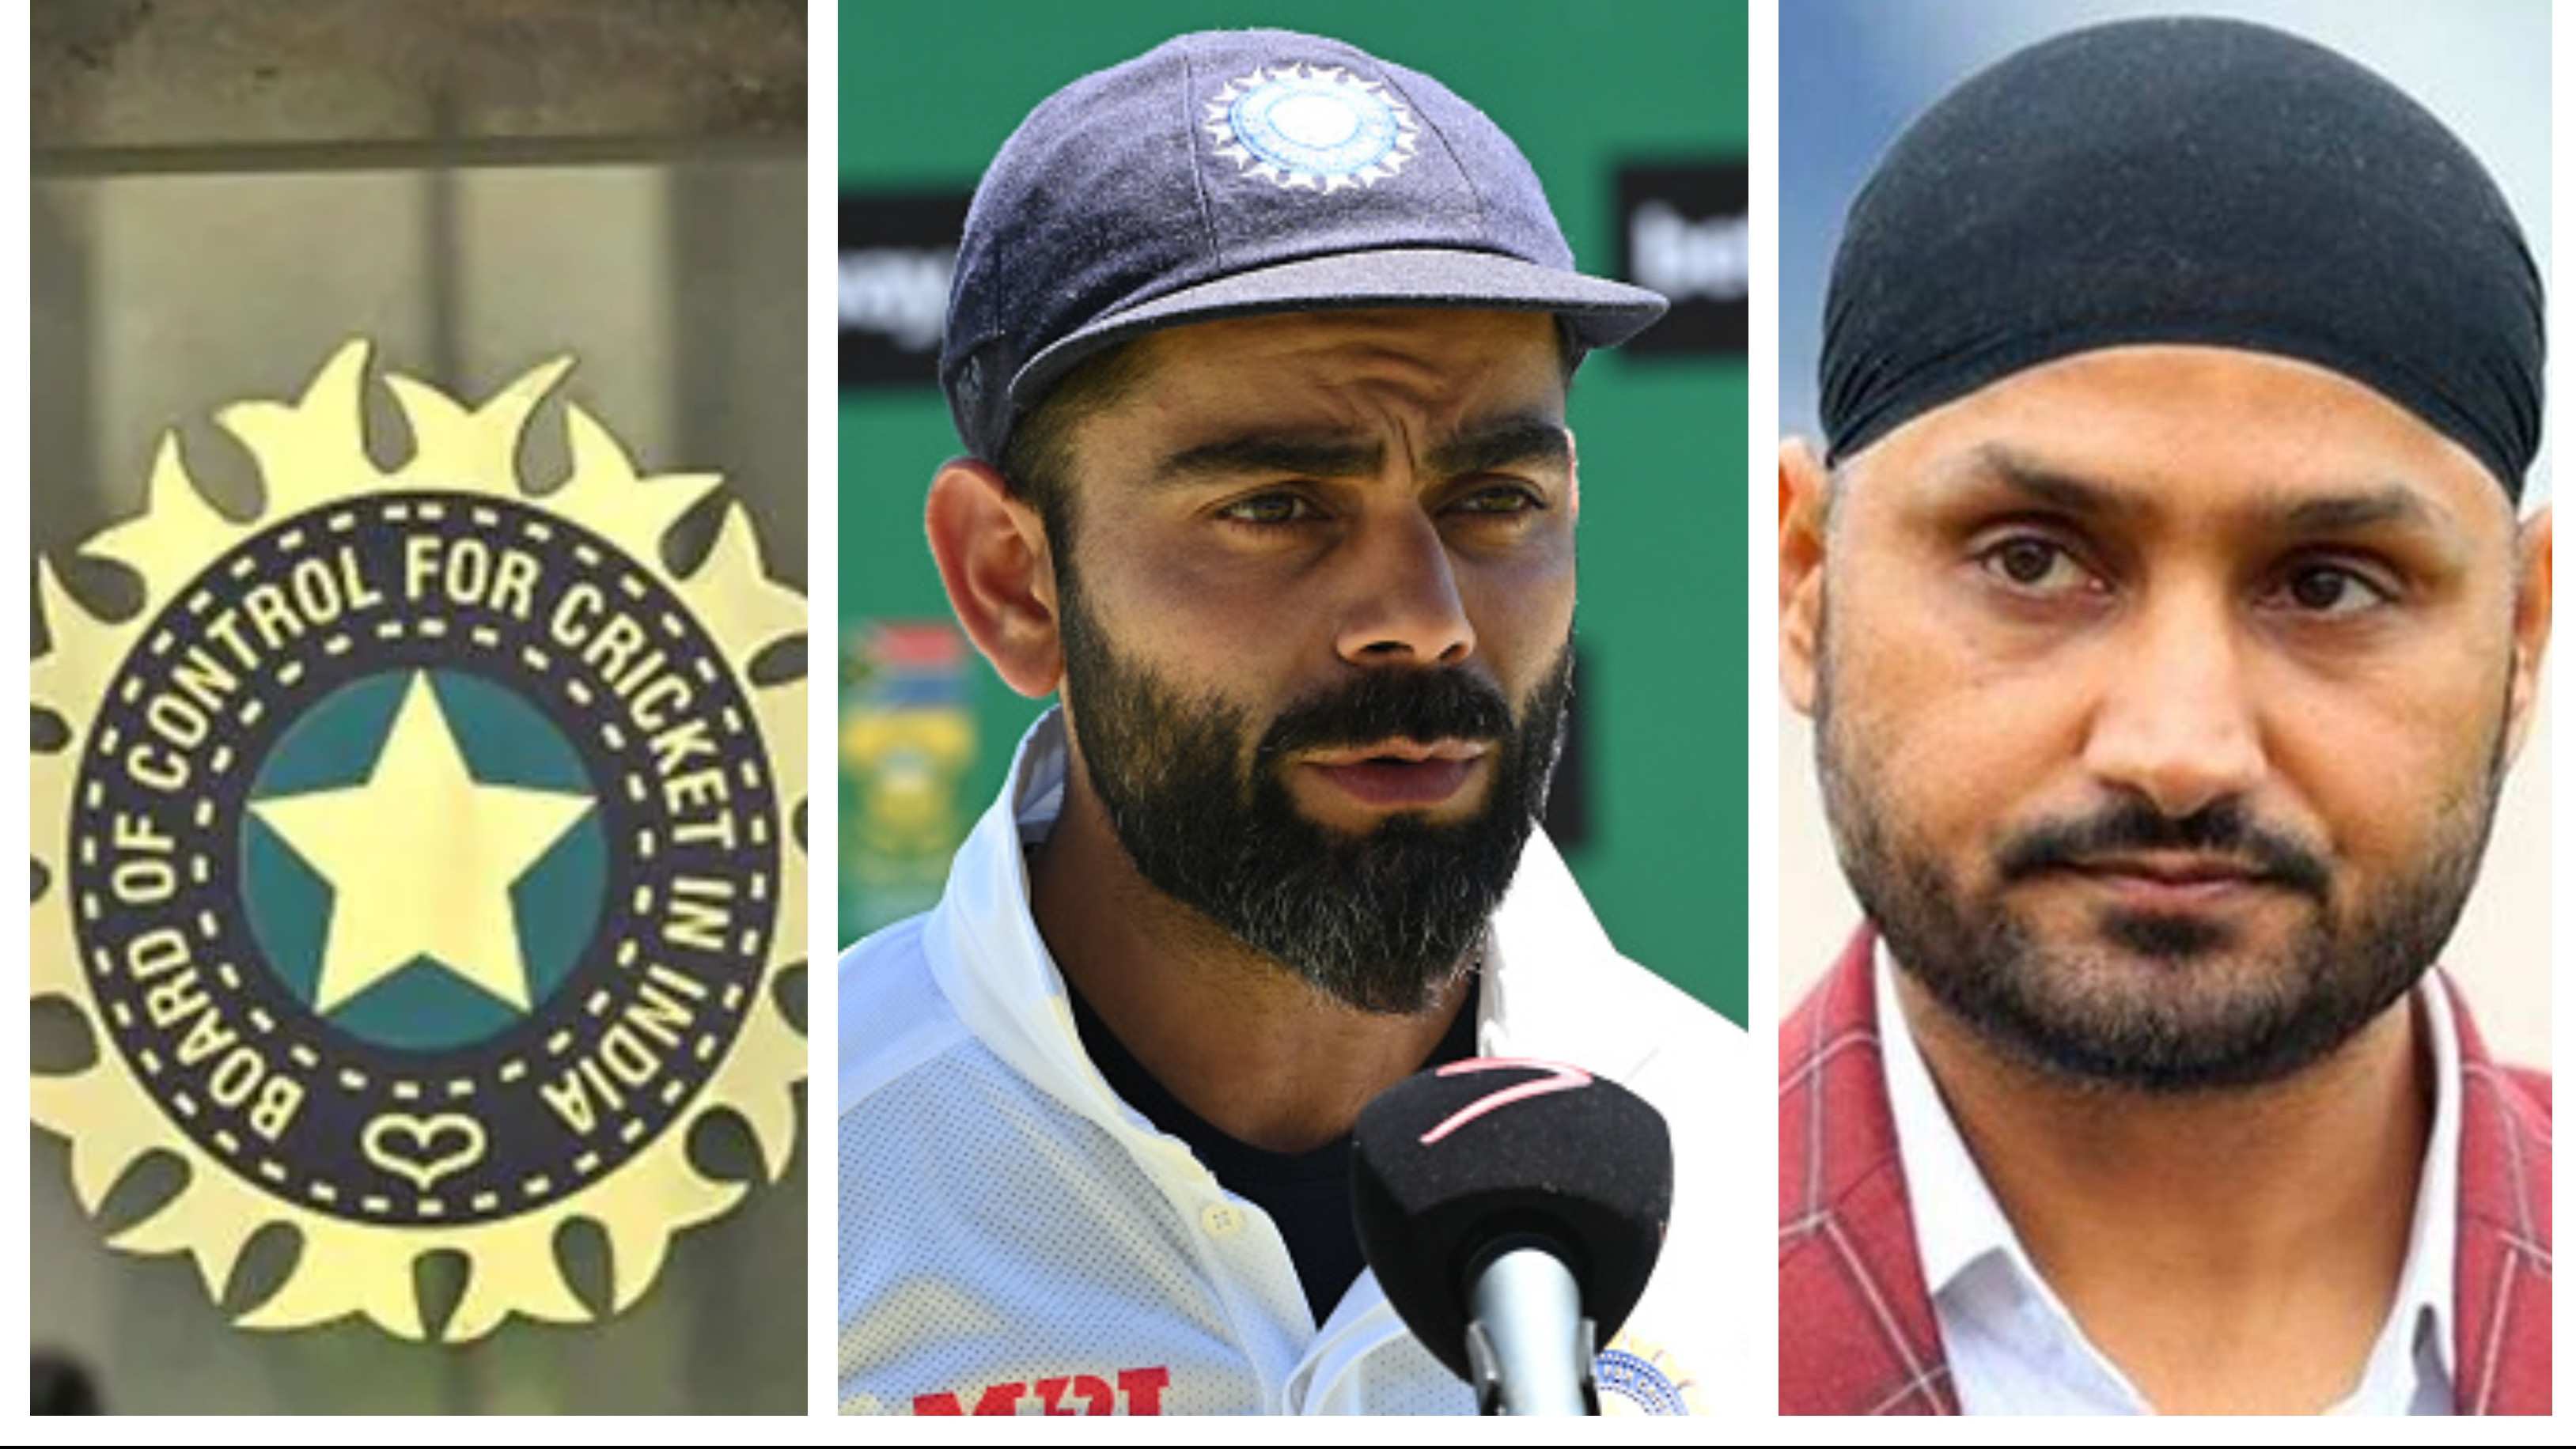 BCCI, cricket fraternity react after Virat Kohli steps down as India’s Test captain